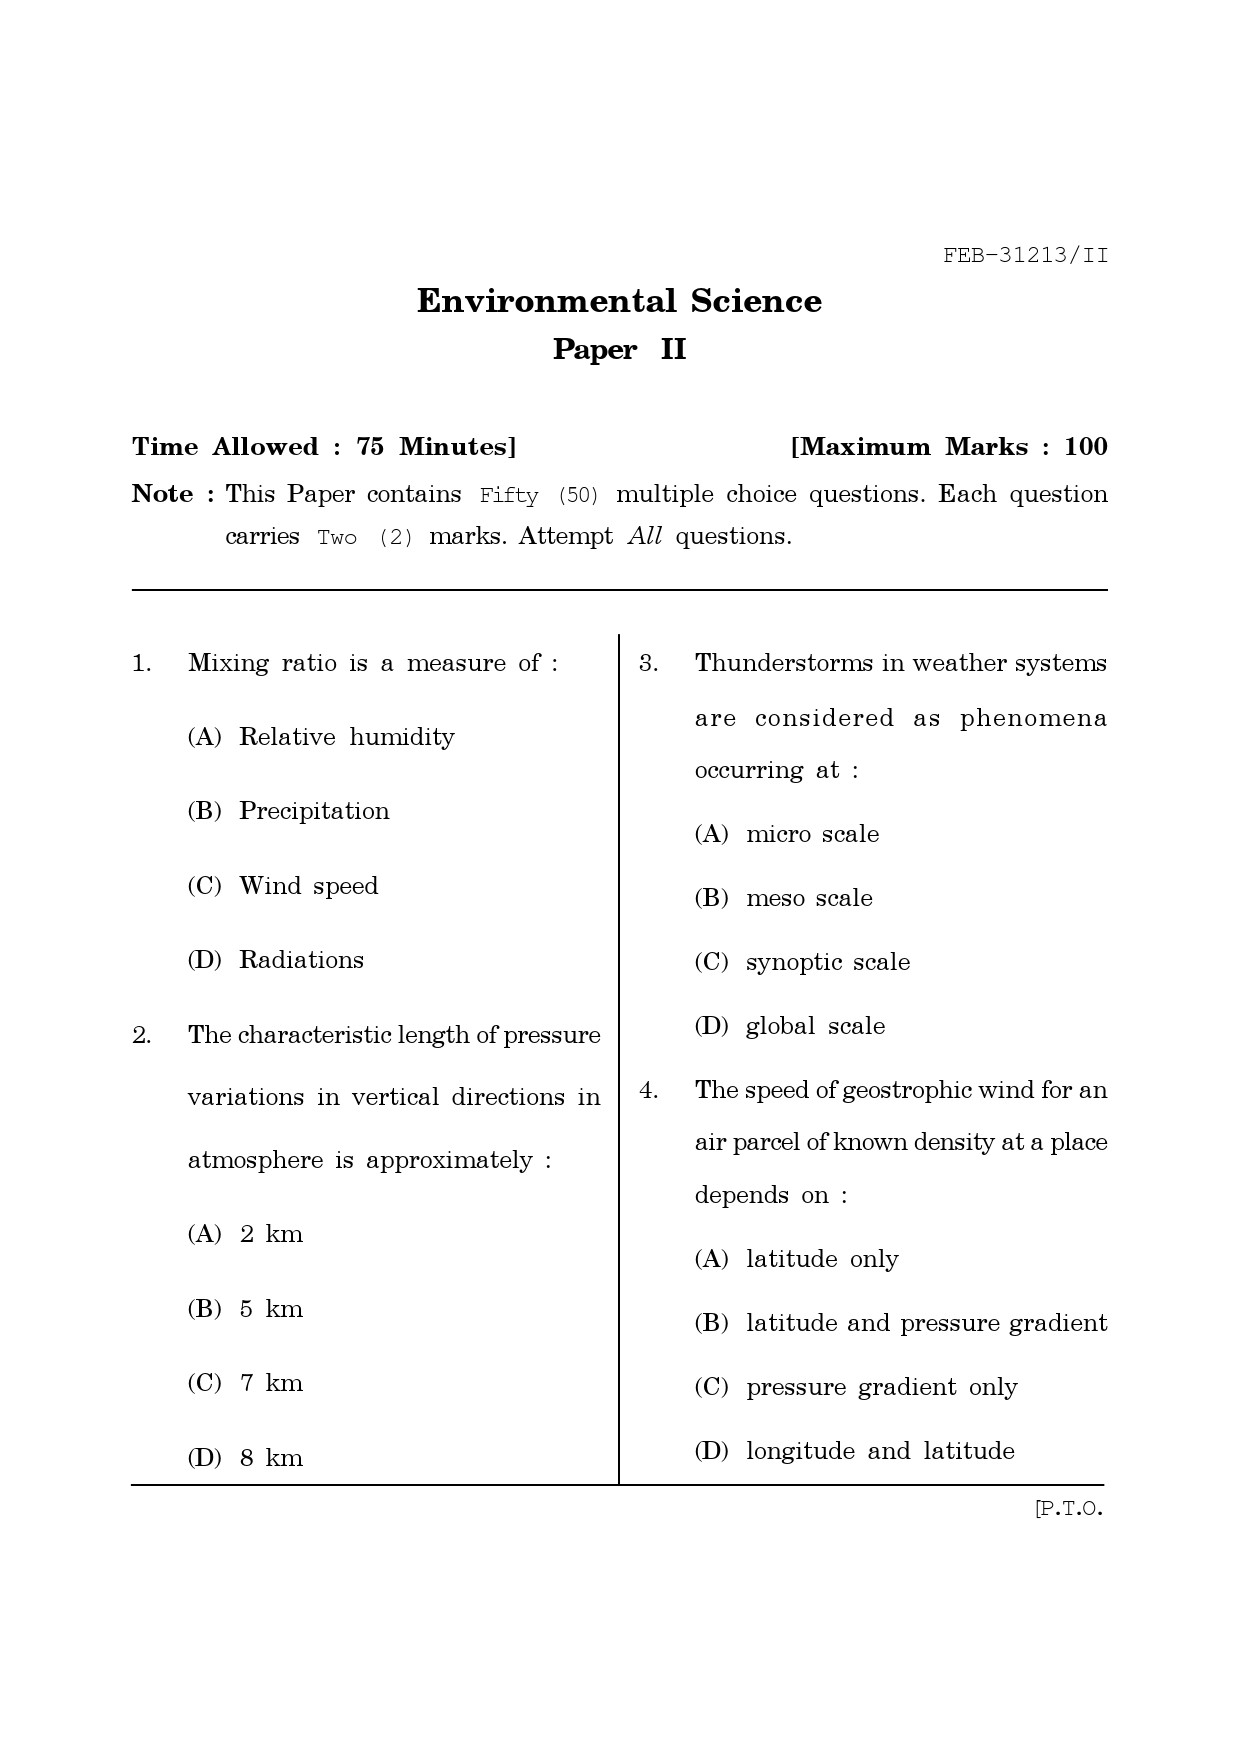 Maharashtra SET Environmental Sciences Question Paper II February 2013 1